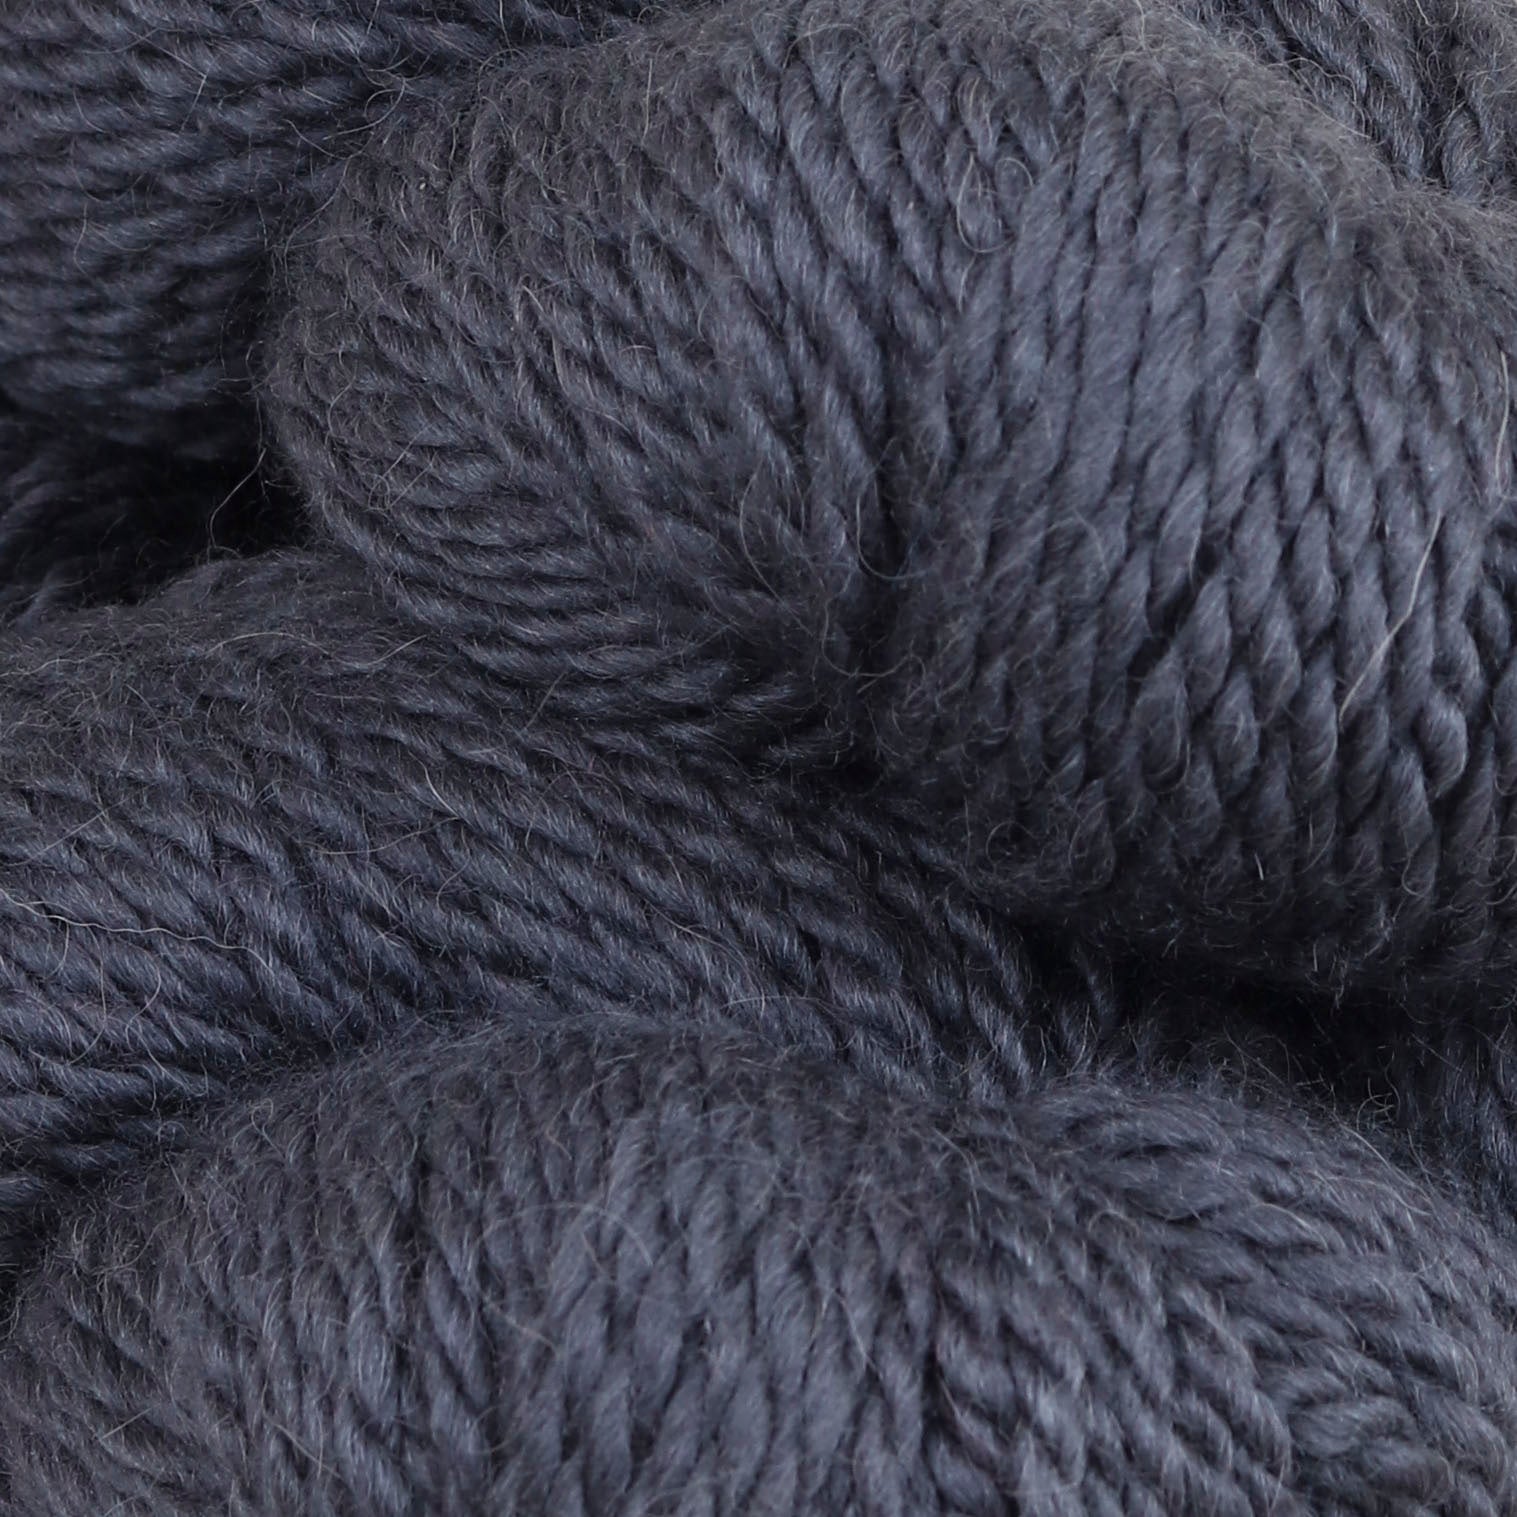 Image of the Fibre Co. Tundra in Petrel a dark grey color.